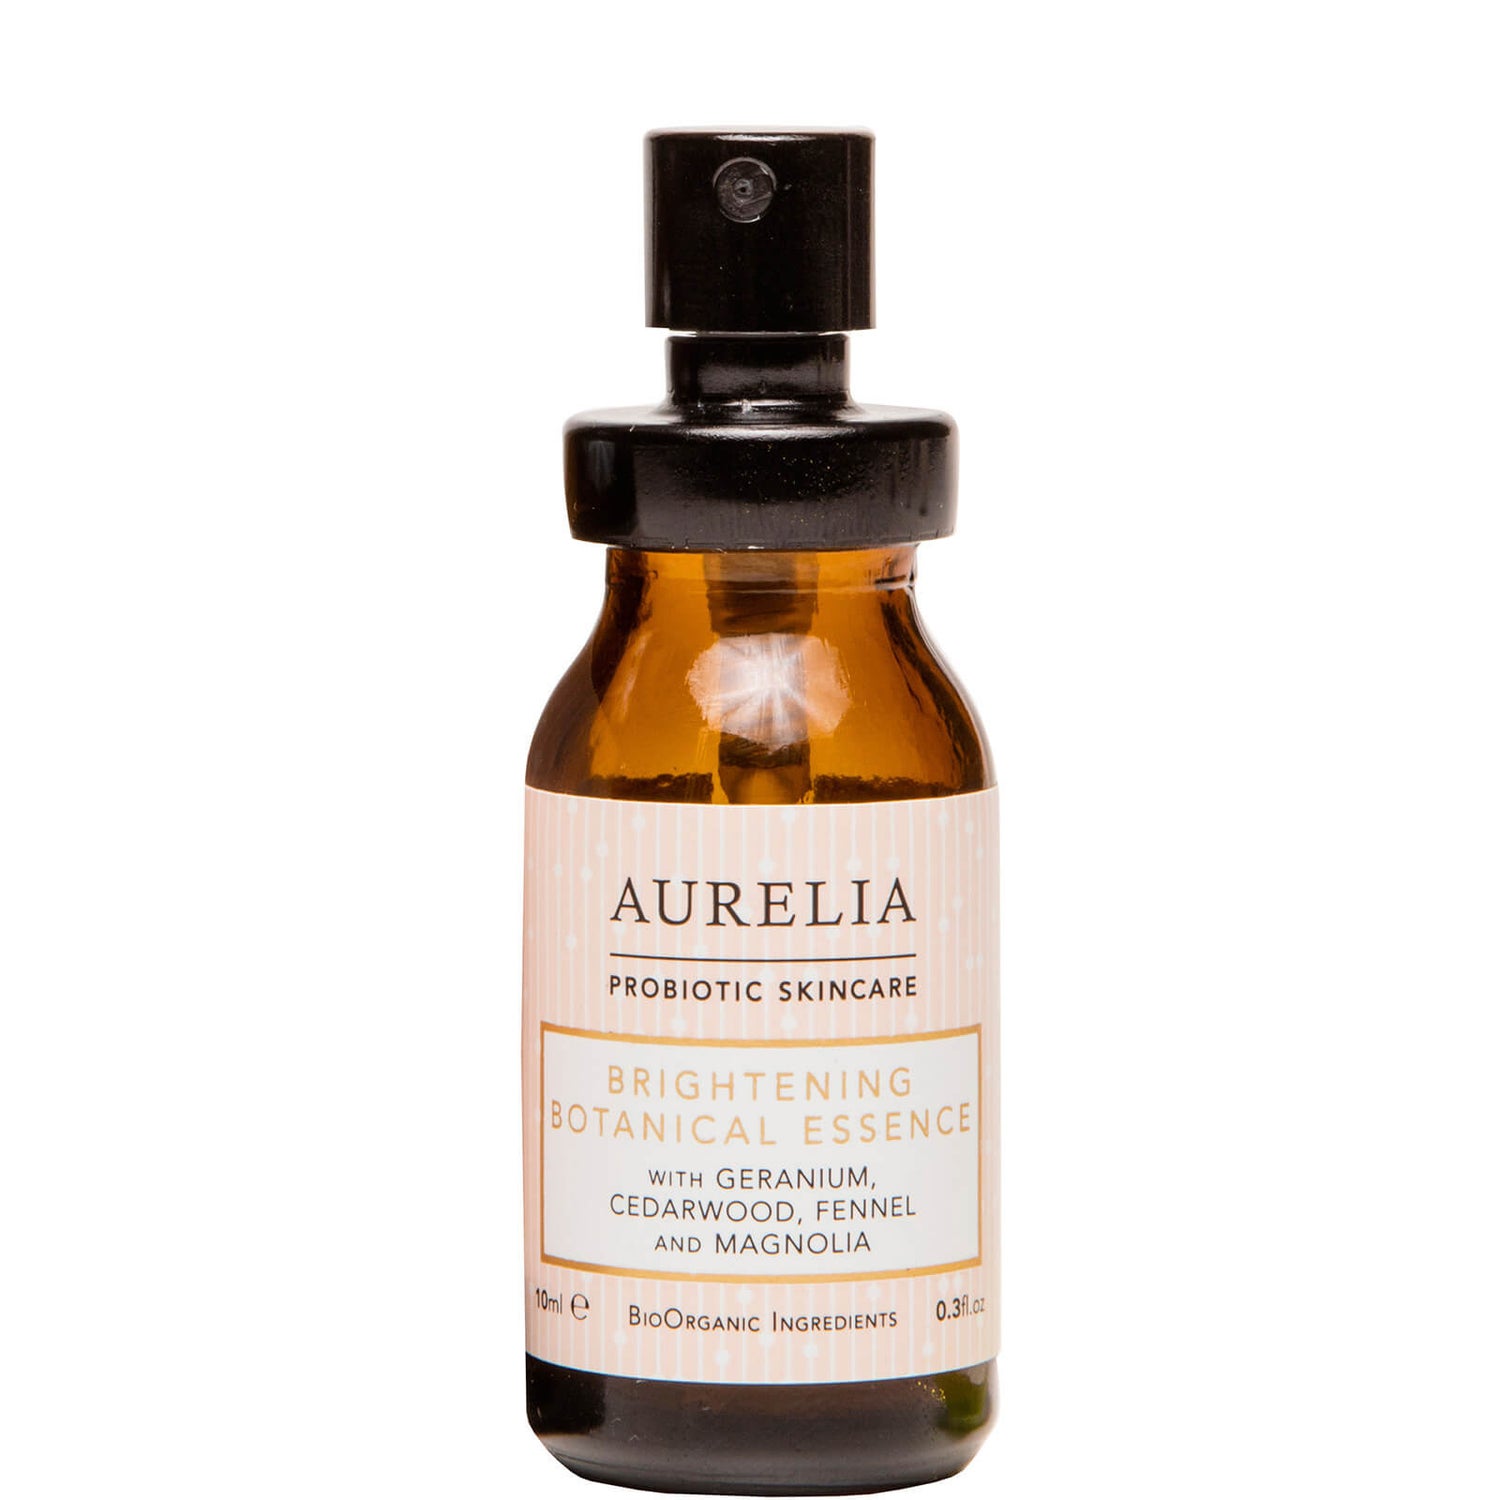 Aurelia Probiotic Skincare Brightening Botanical Essence(오렐리아 프로바이오틱 스킨케어 브라이트닝 보태니컬 에센스 10ml)